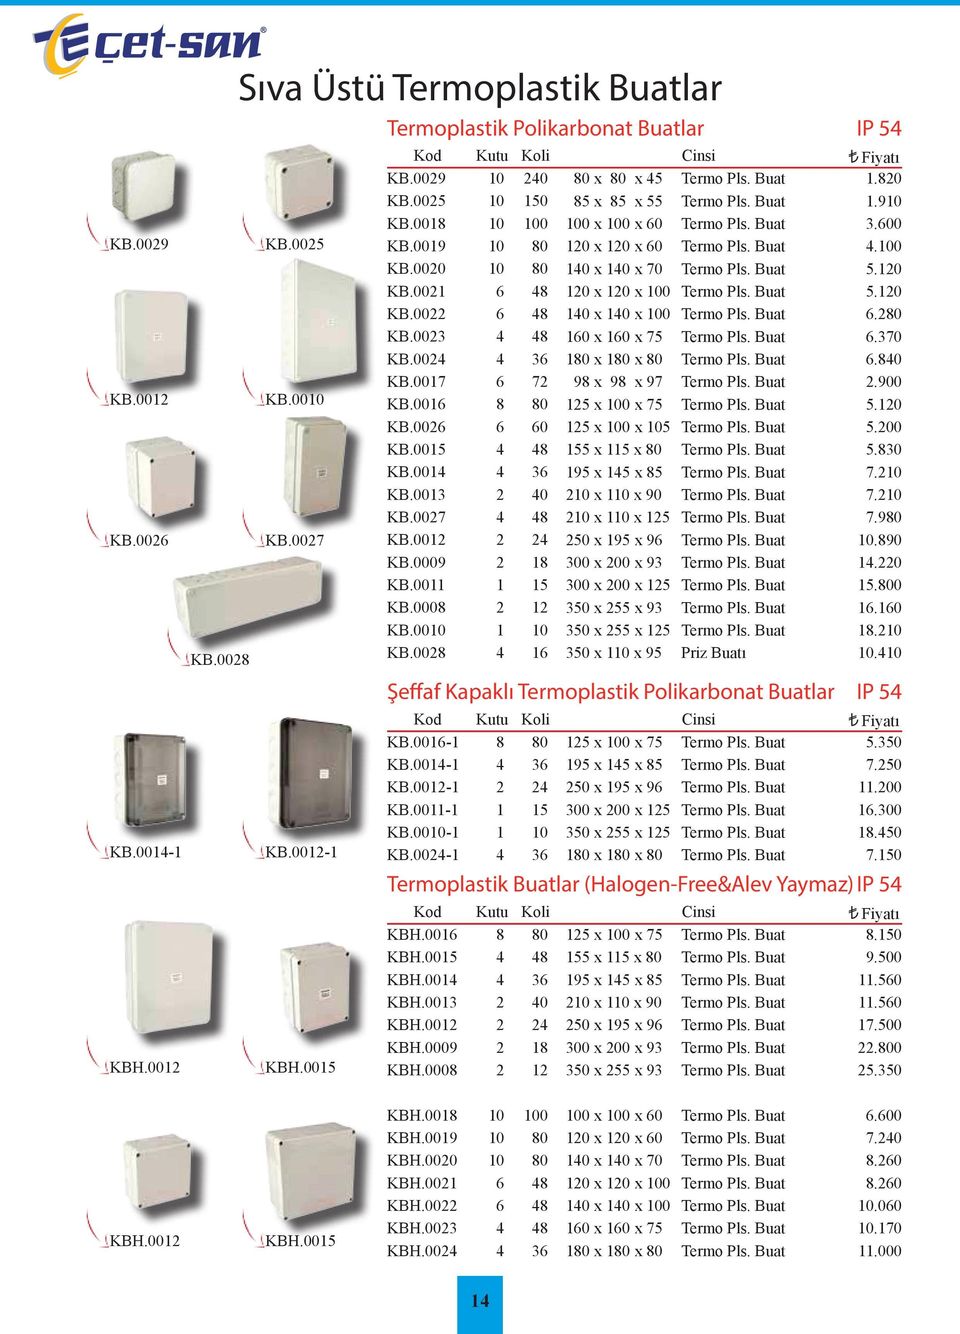 00- IP 54 IP 54 Termoplastik Buatlar (Halogen-Free&Alev Yaymaz) IP 54 KBH.00 KBH.005 KBH.004 KBH.003 KBH.002 KBH.0009 KBH.